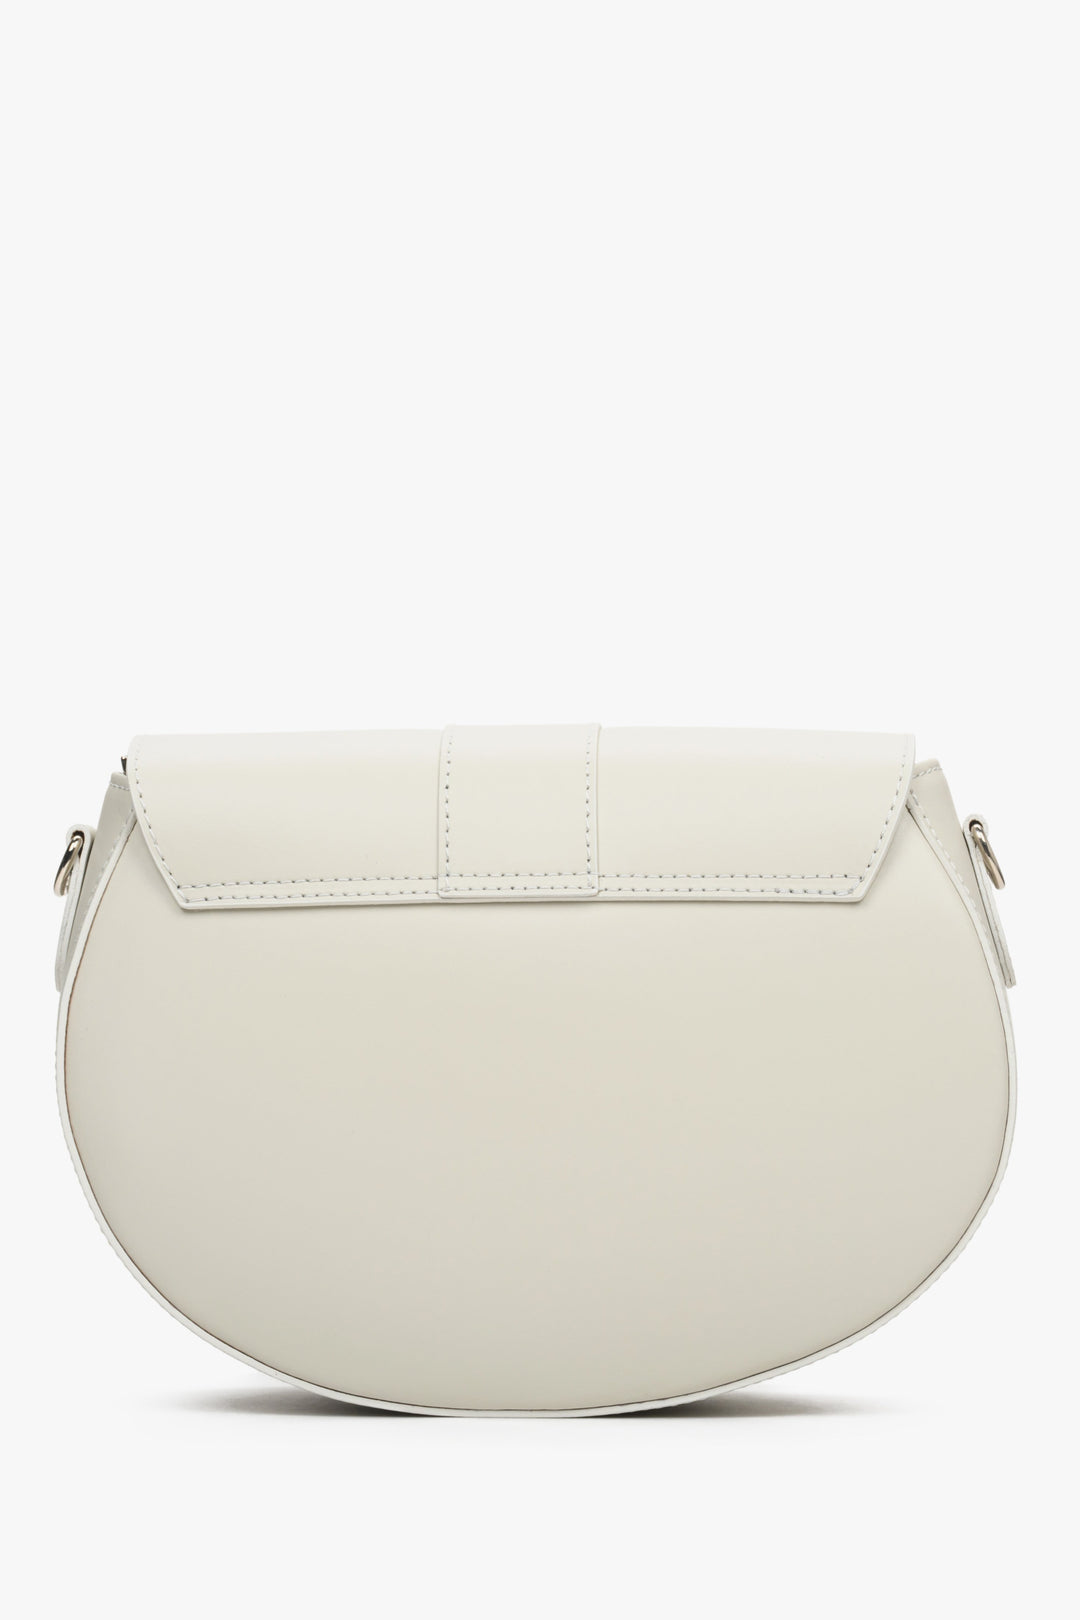 Women's light beige handbag made of genuine leather - reverse side.